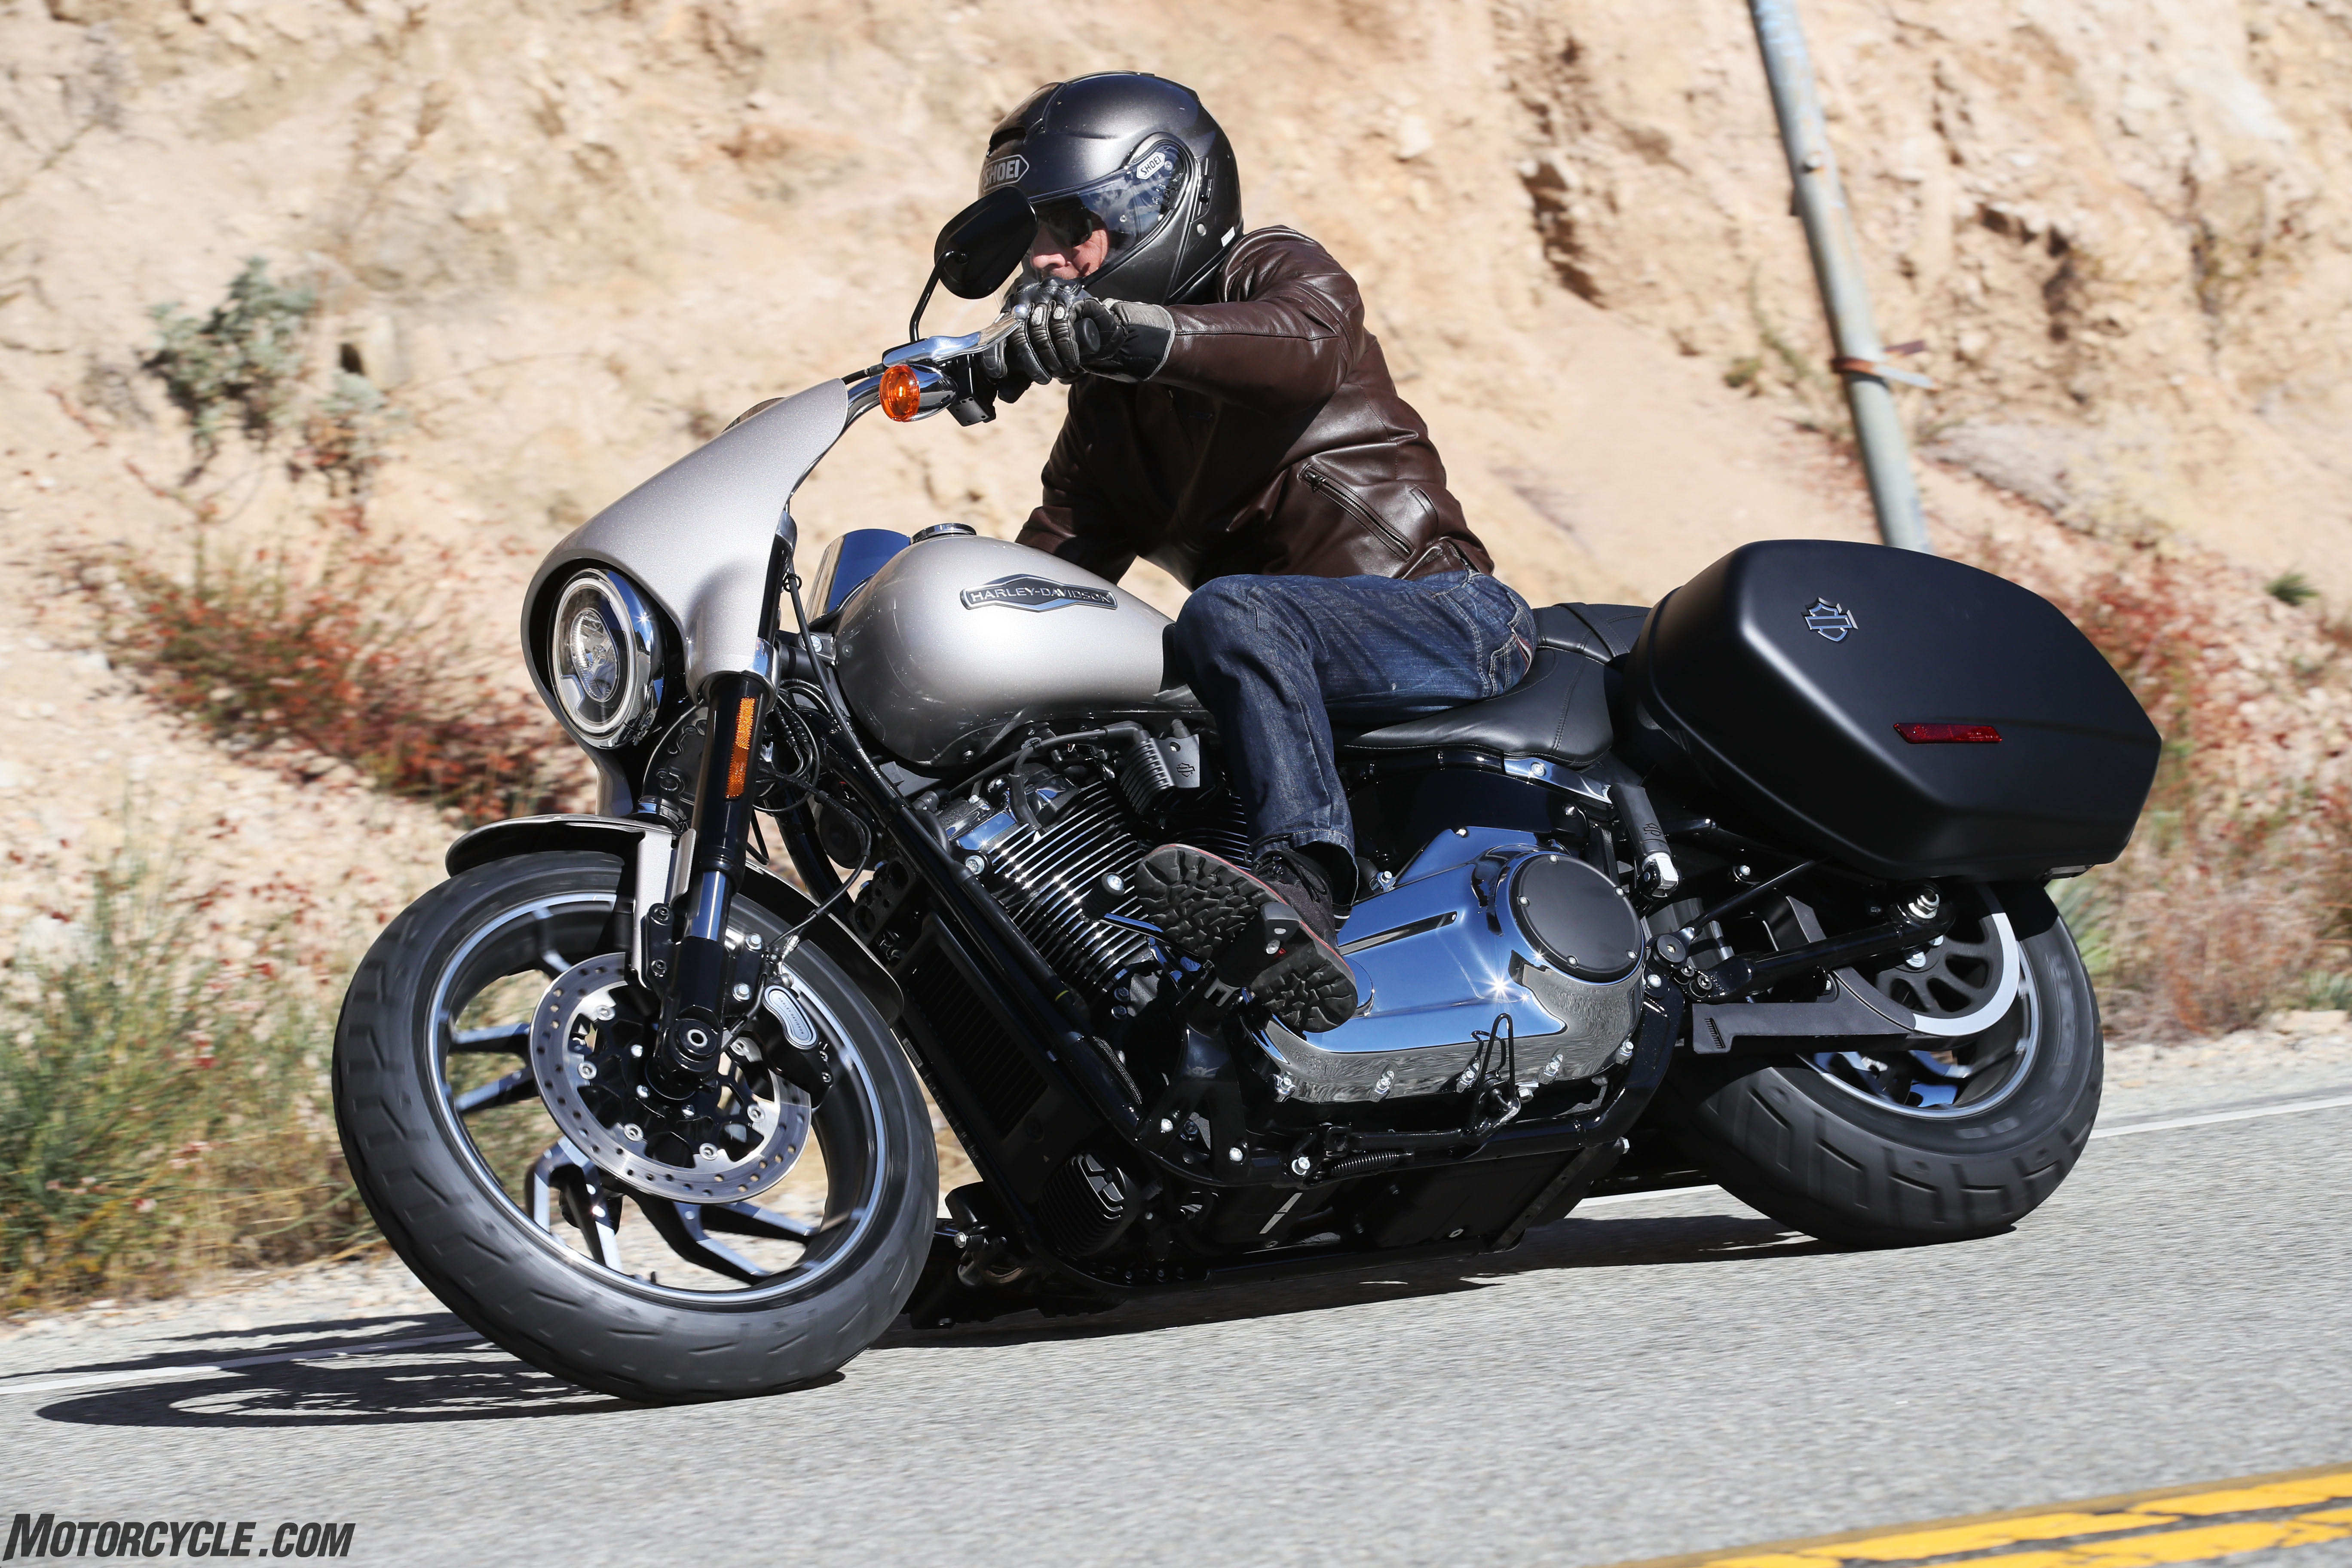 Тест-драйв мотоциклов - harley-davidson sport glide. легким движением руки